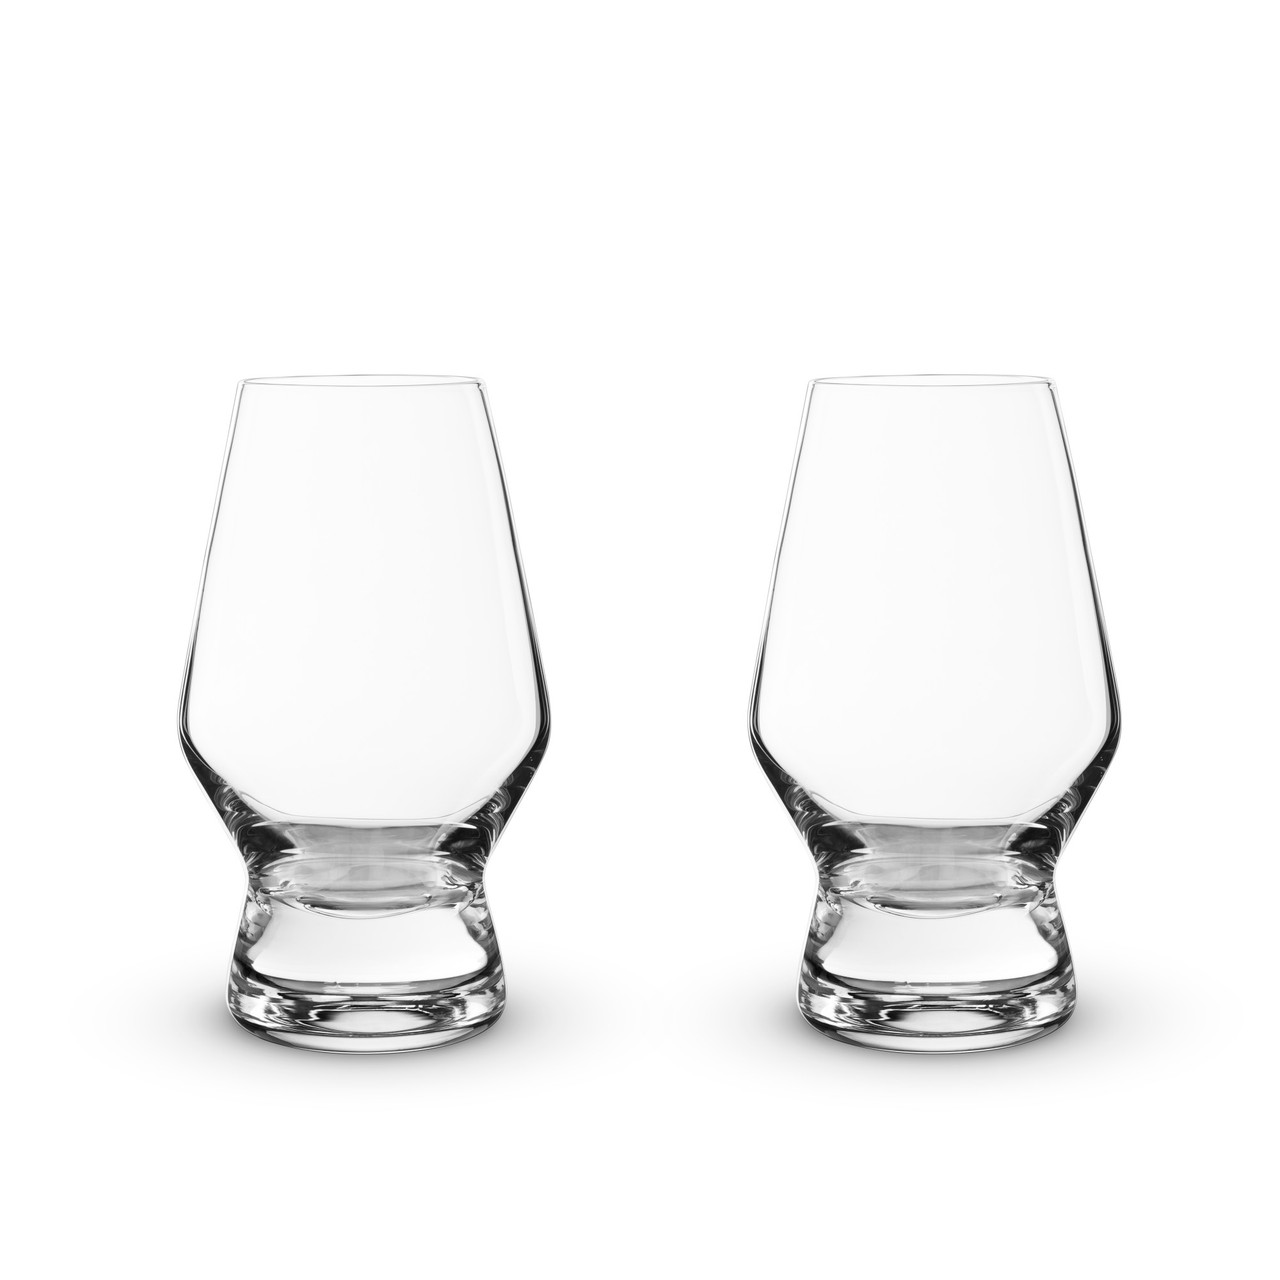 Footed Crystal Scotch Glasses by Viski®